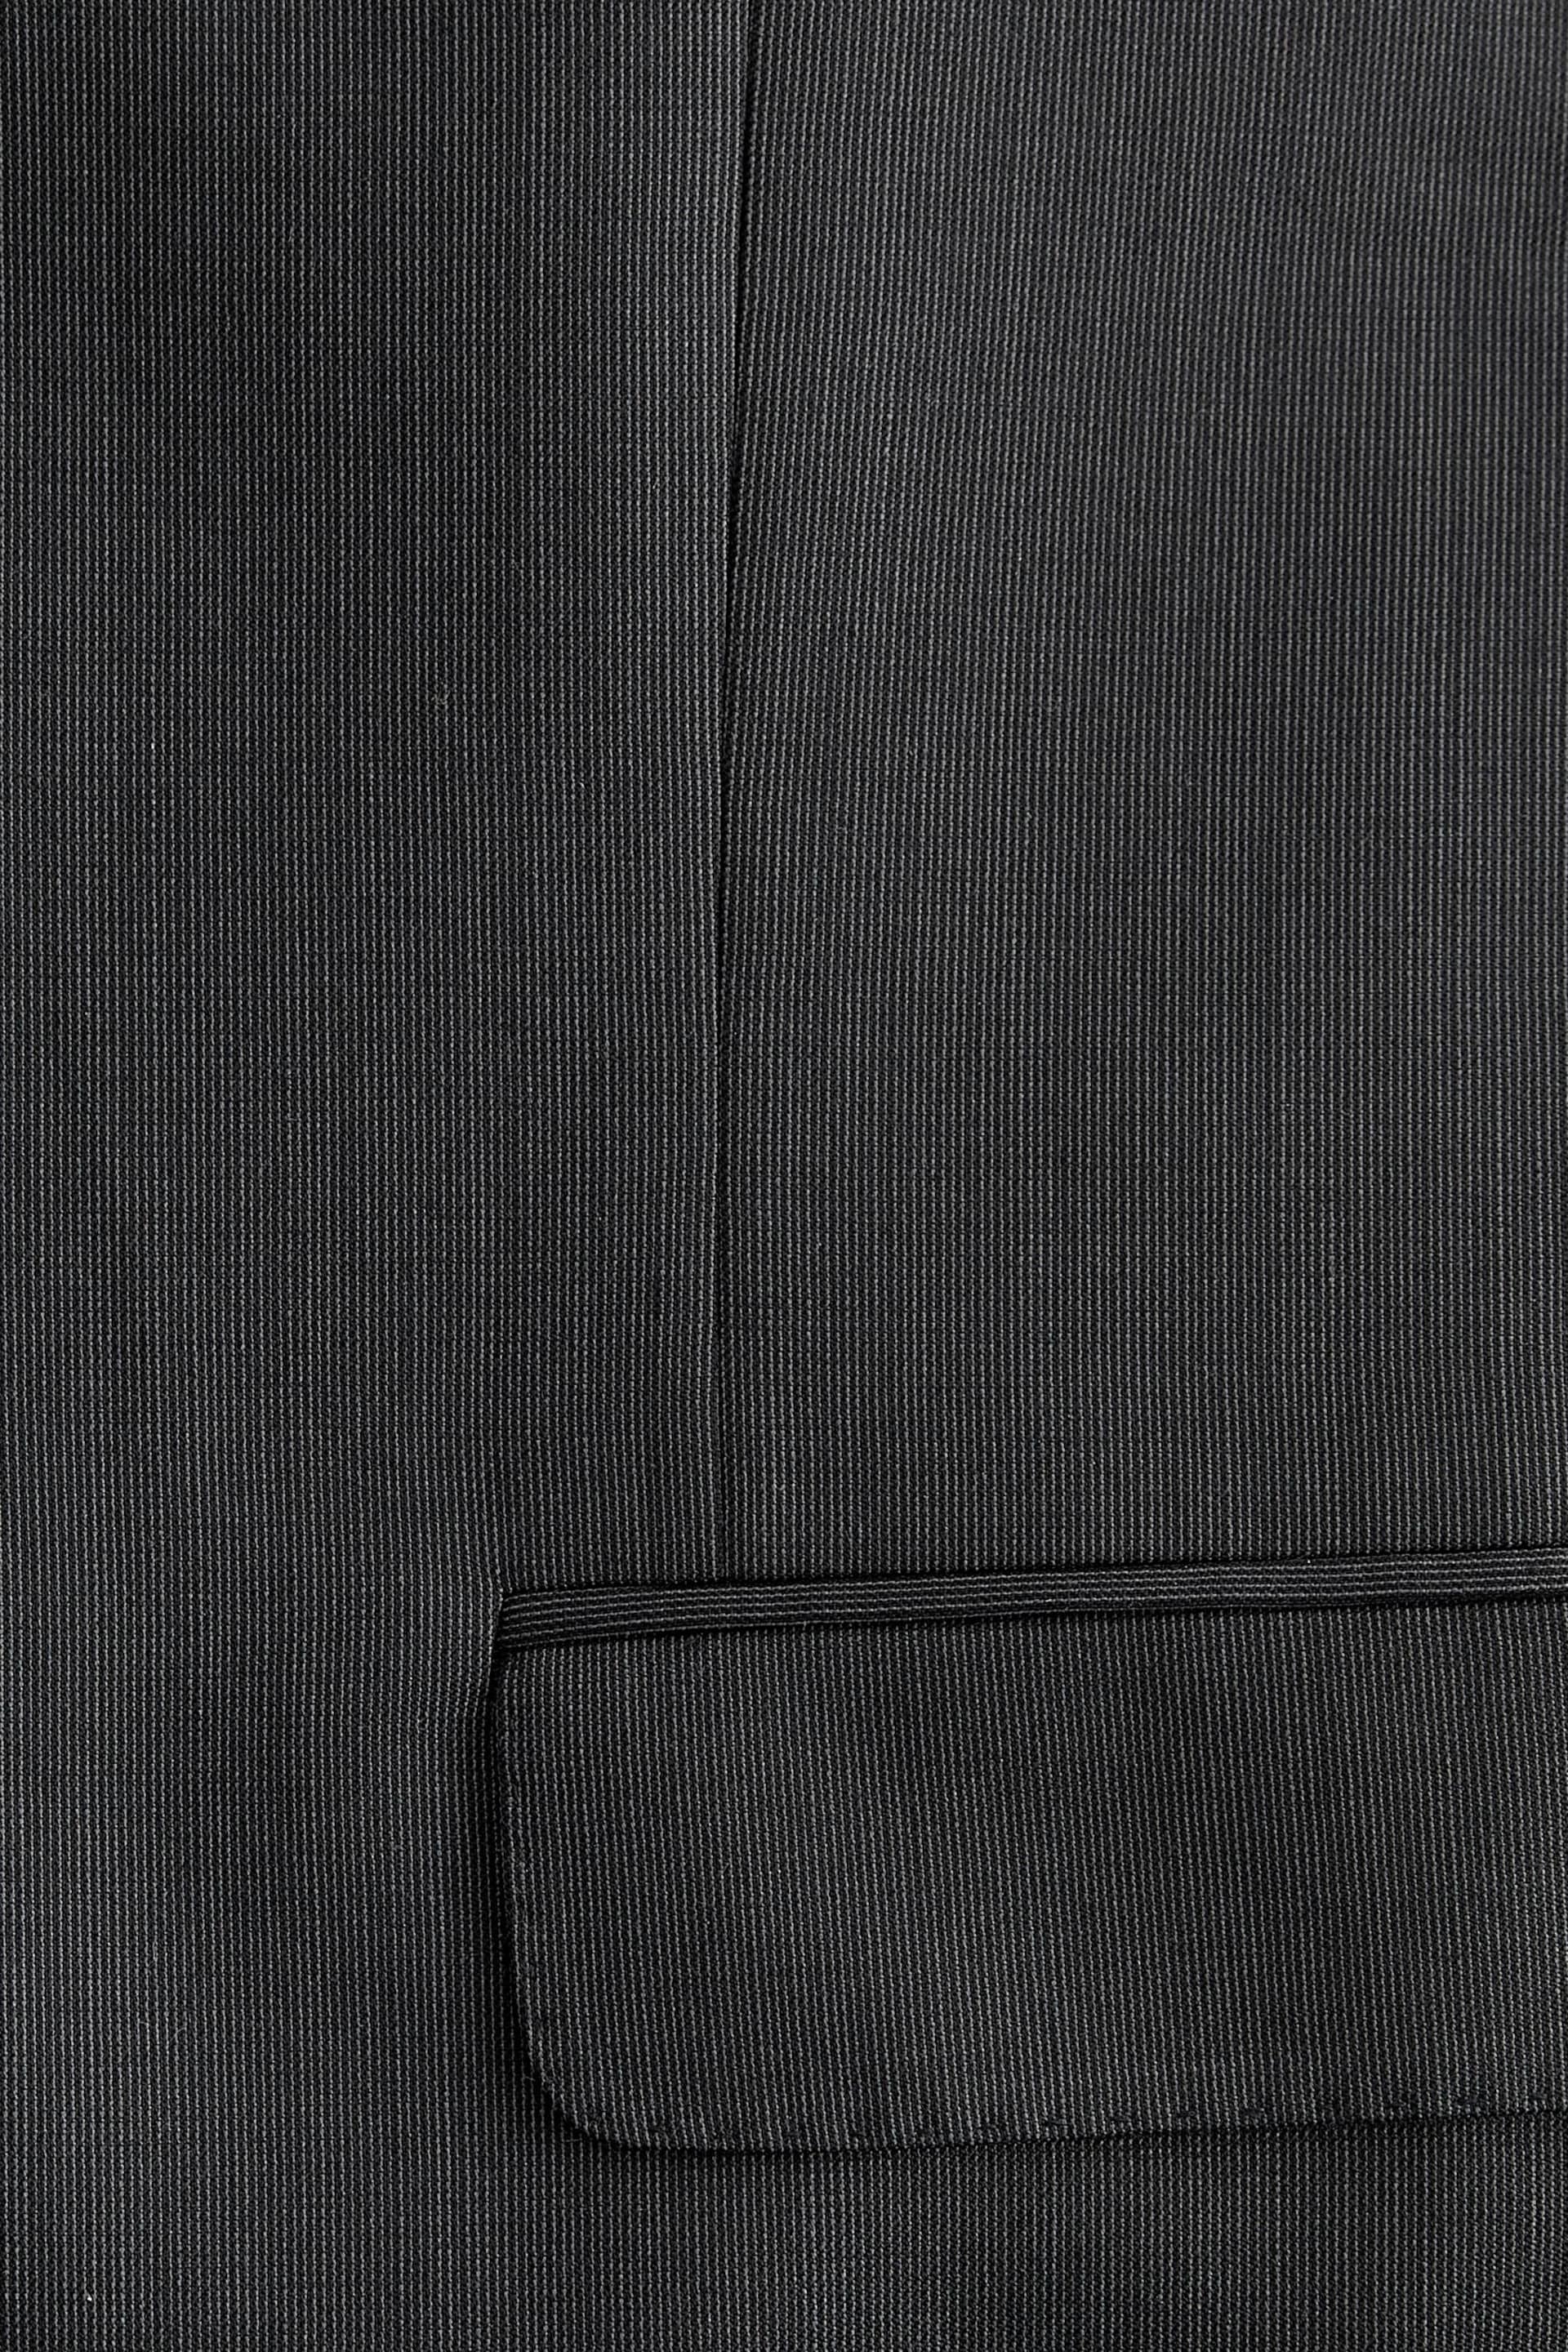 Charcoal Grey Slim Fit Wool Blend Suit Jacket - Image 11 of 11